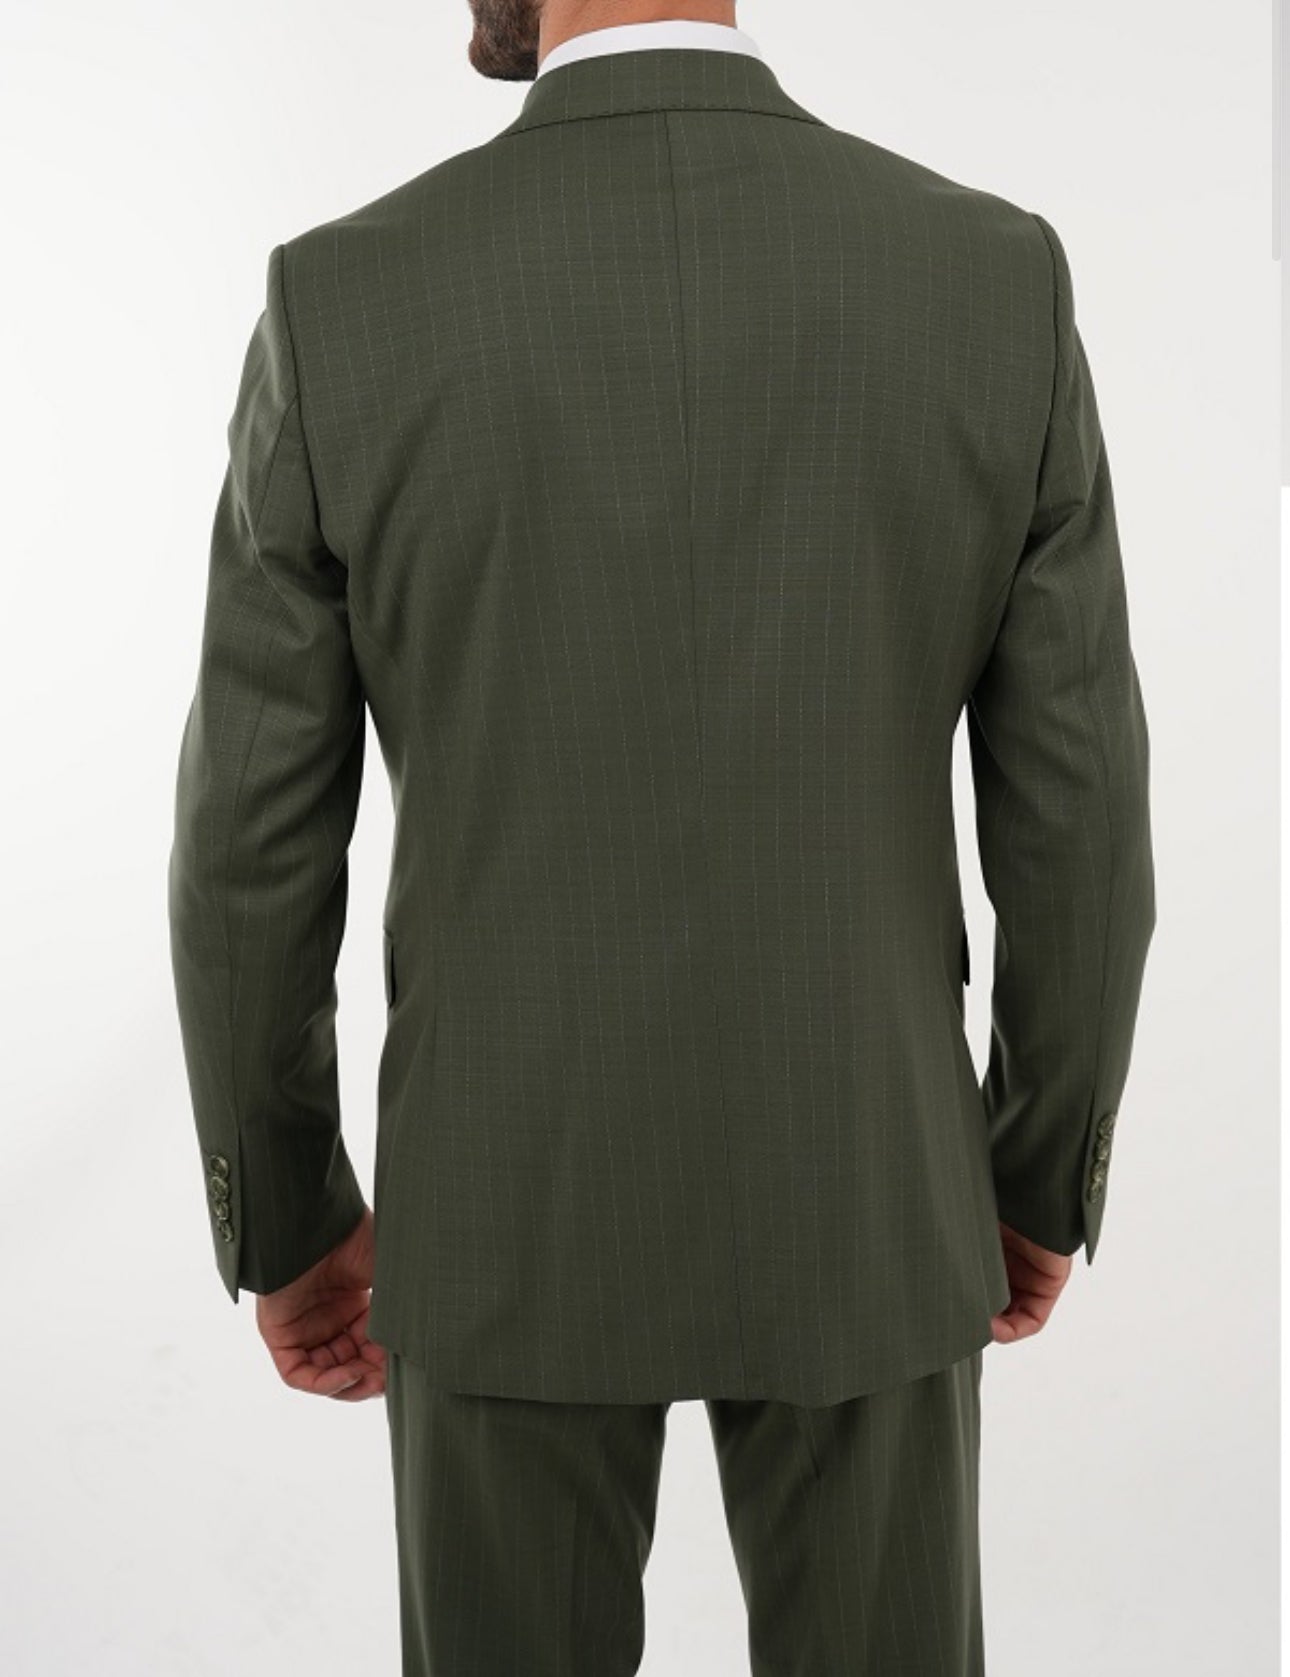 Bojoni Manly Khaki Slim Fit Pinstripe Suit